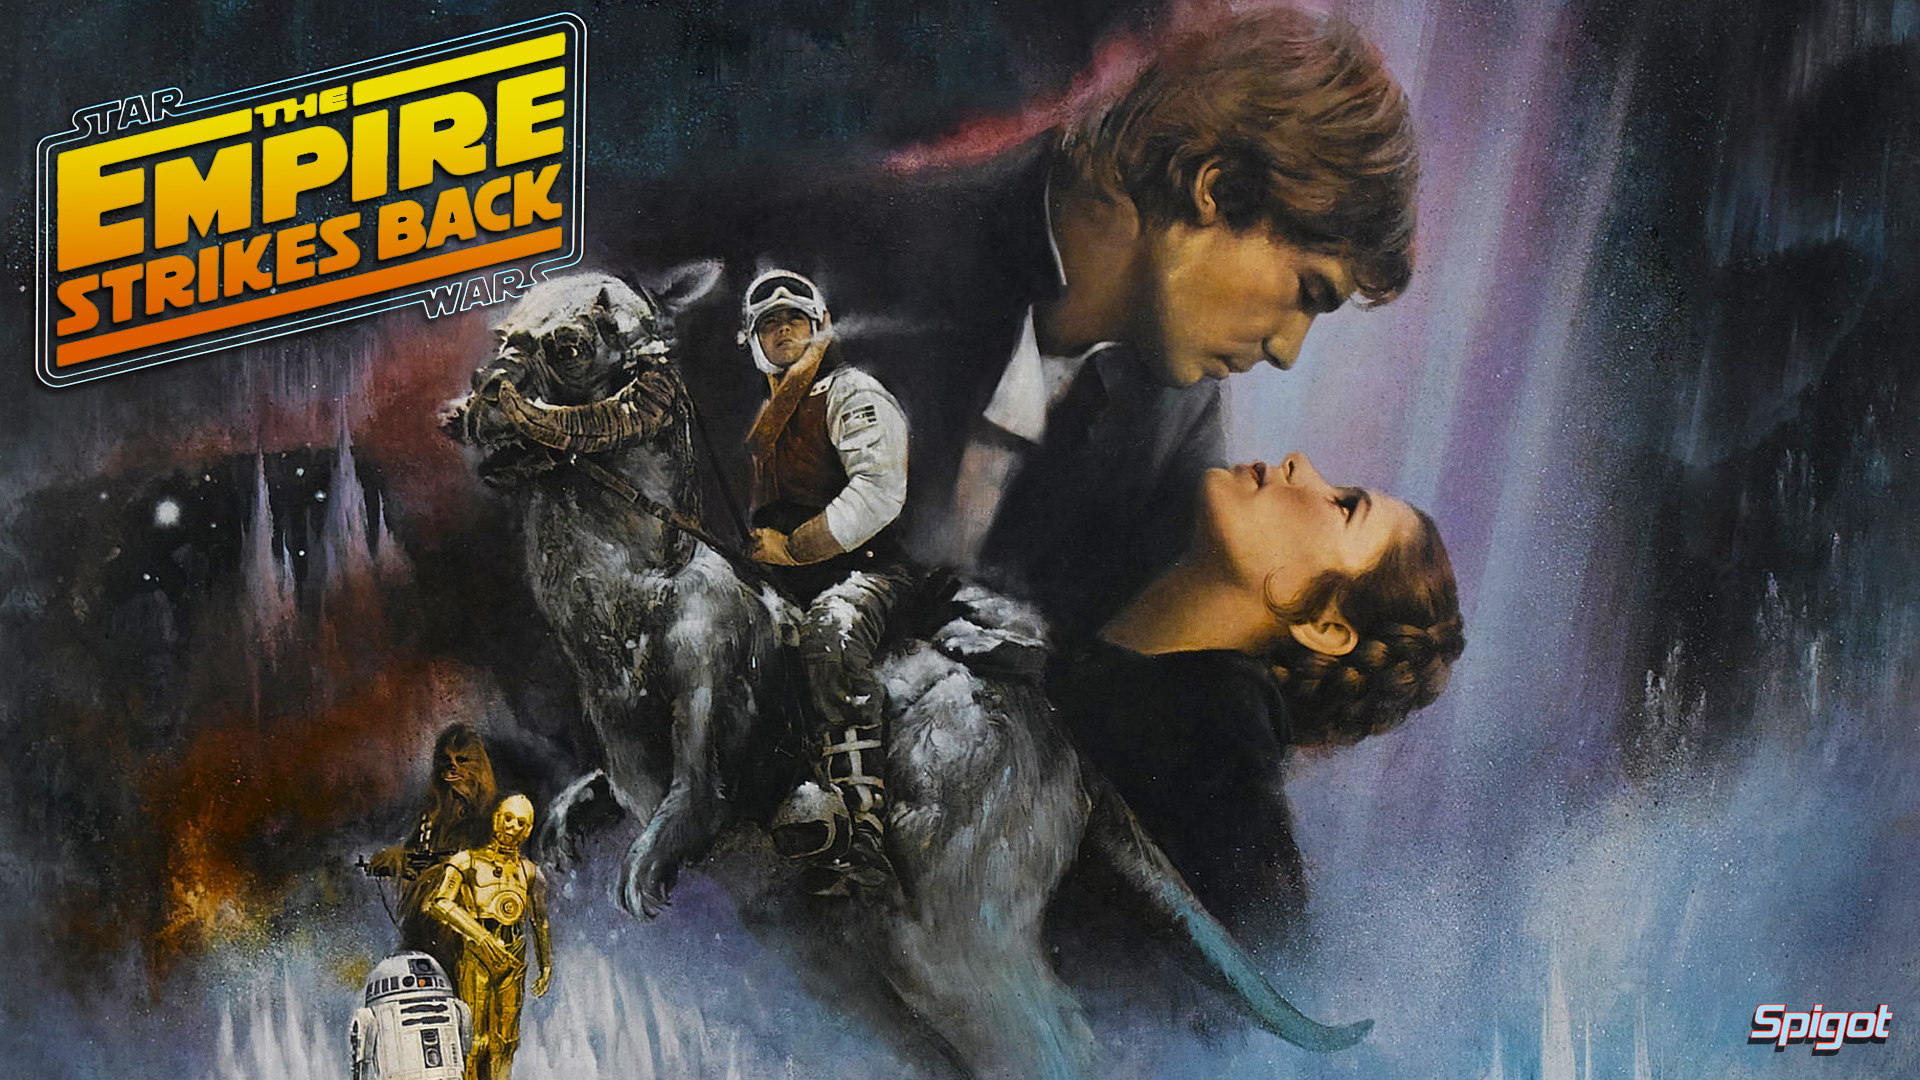 Star Wars Episode V The Empire Strikes Back Wallpaper X